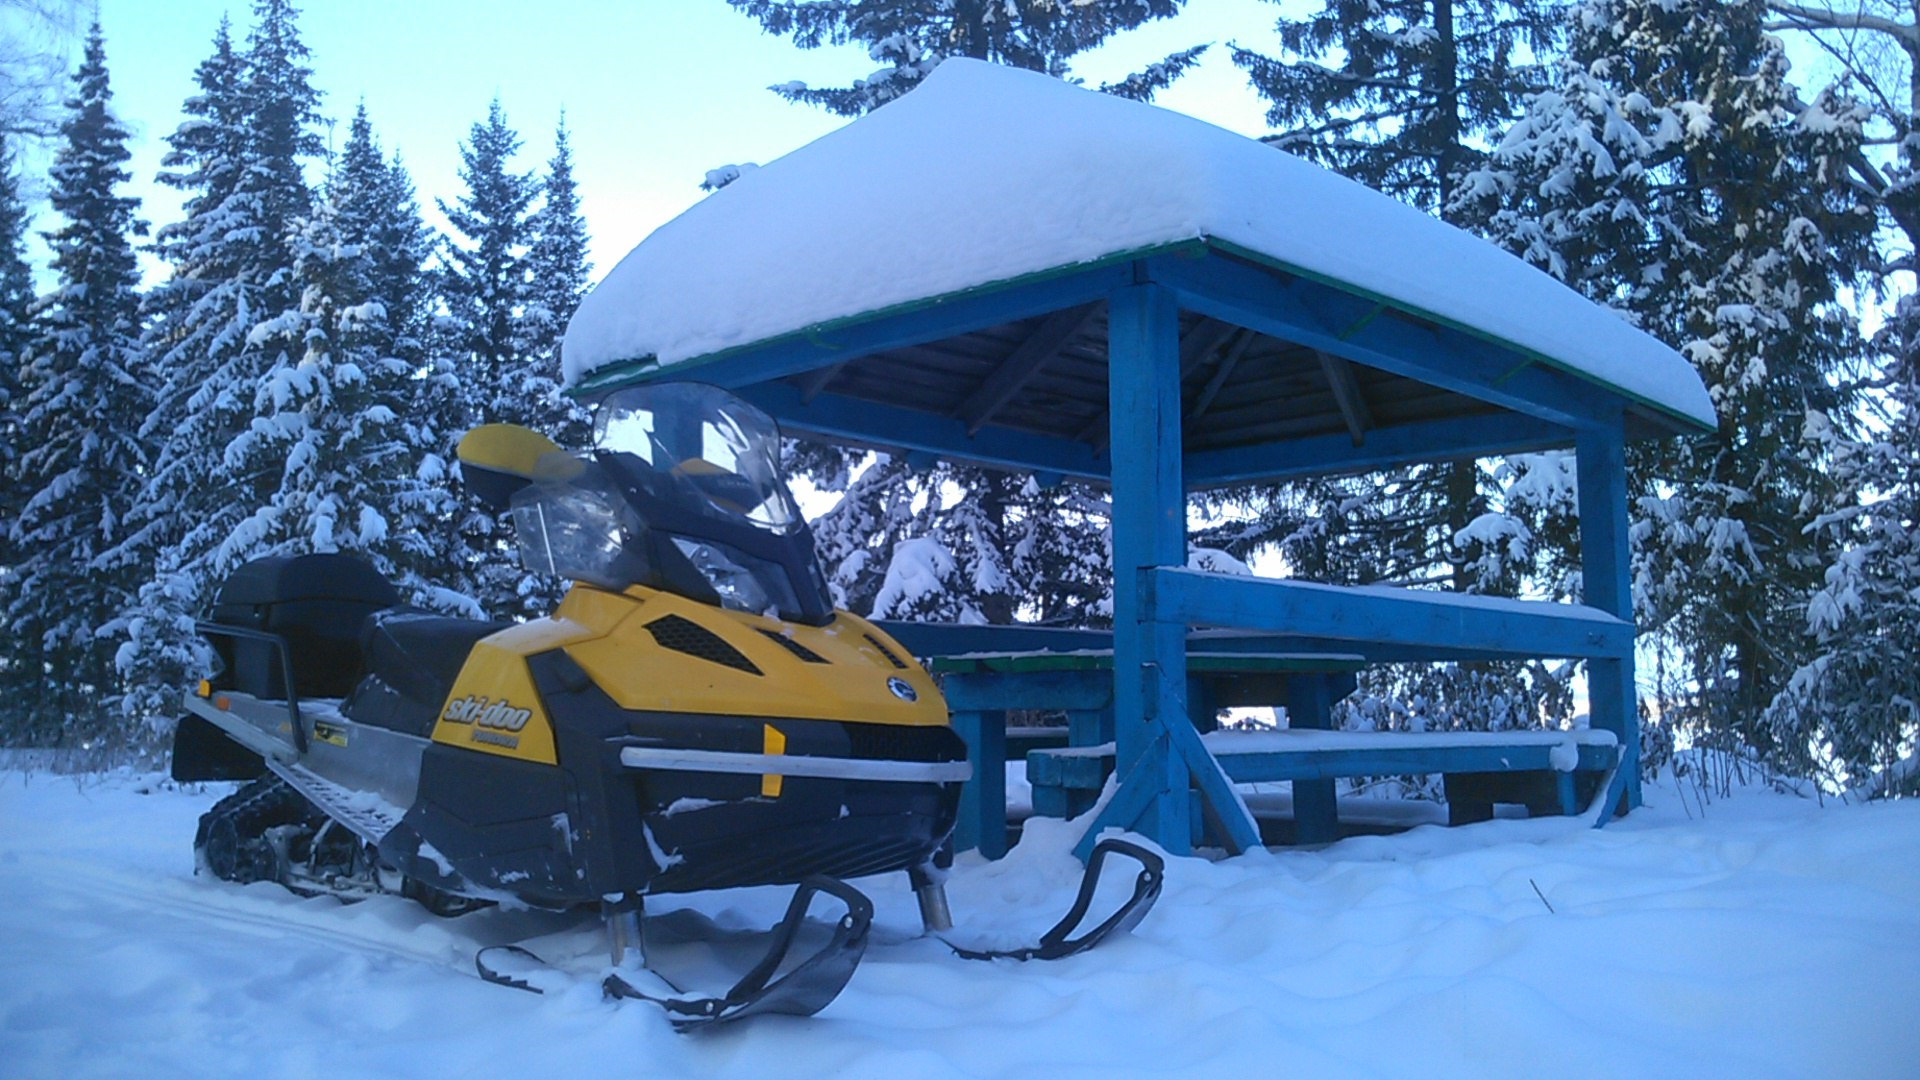 Brp ski-doo tundra lt 550 f: отзывы владельцев снегохода, технические характеристики и цена